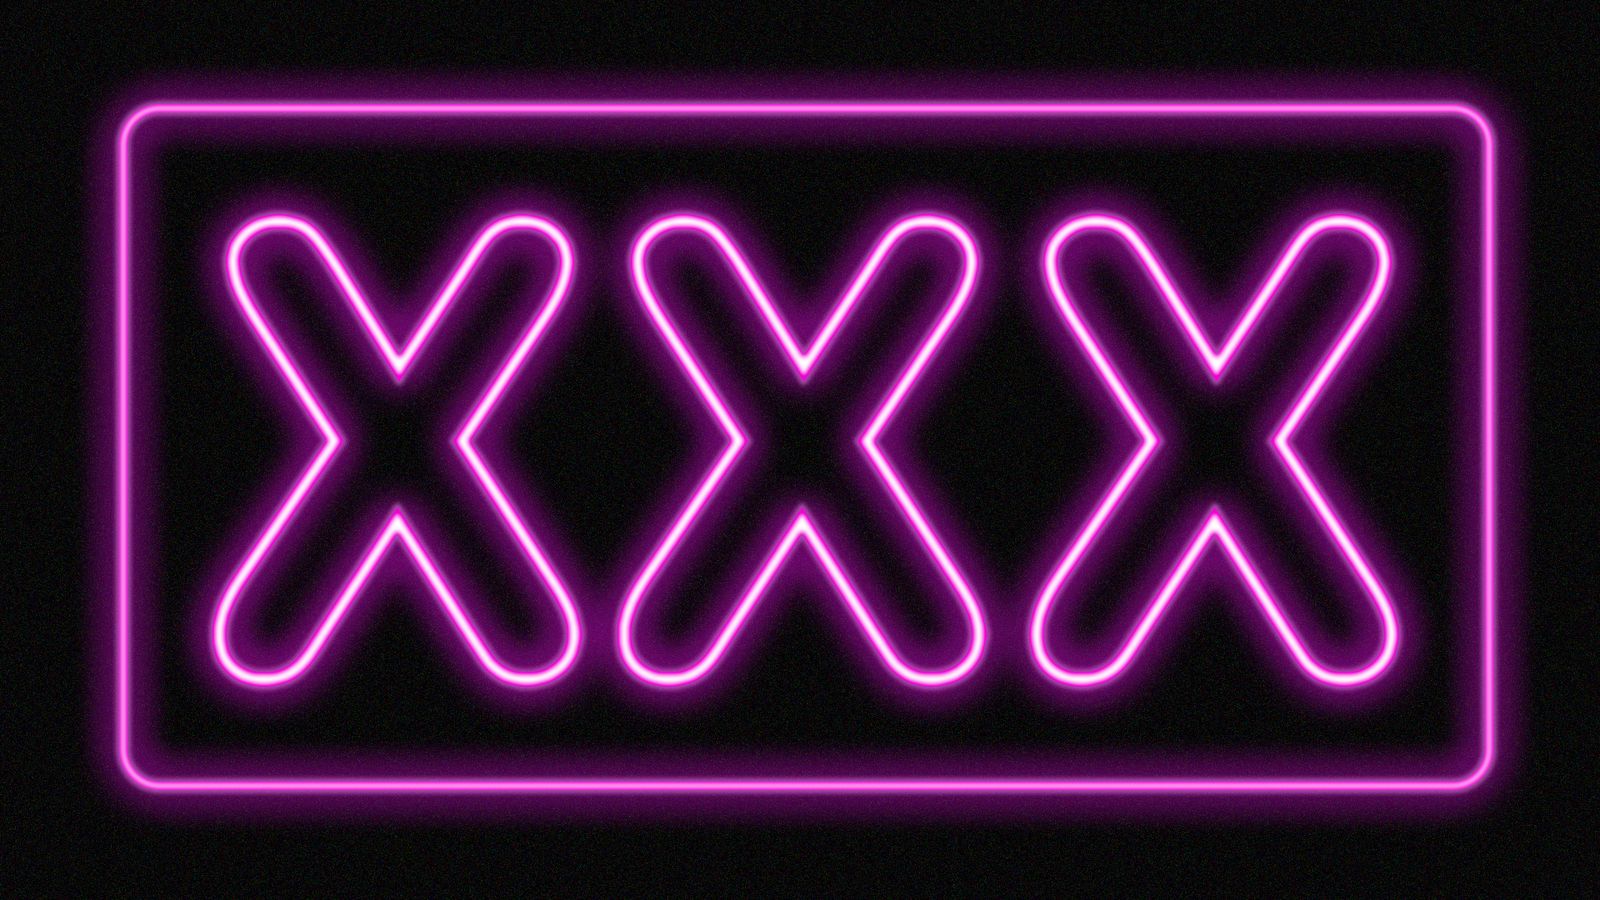 Xxxvideos 12ayr - New Pornhub owner has plans beyond porn